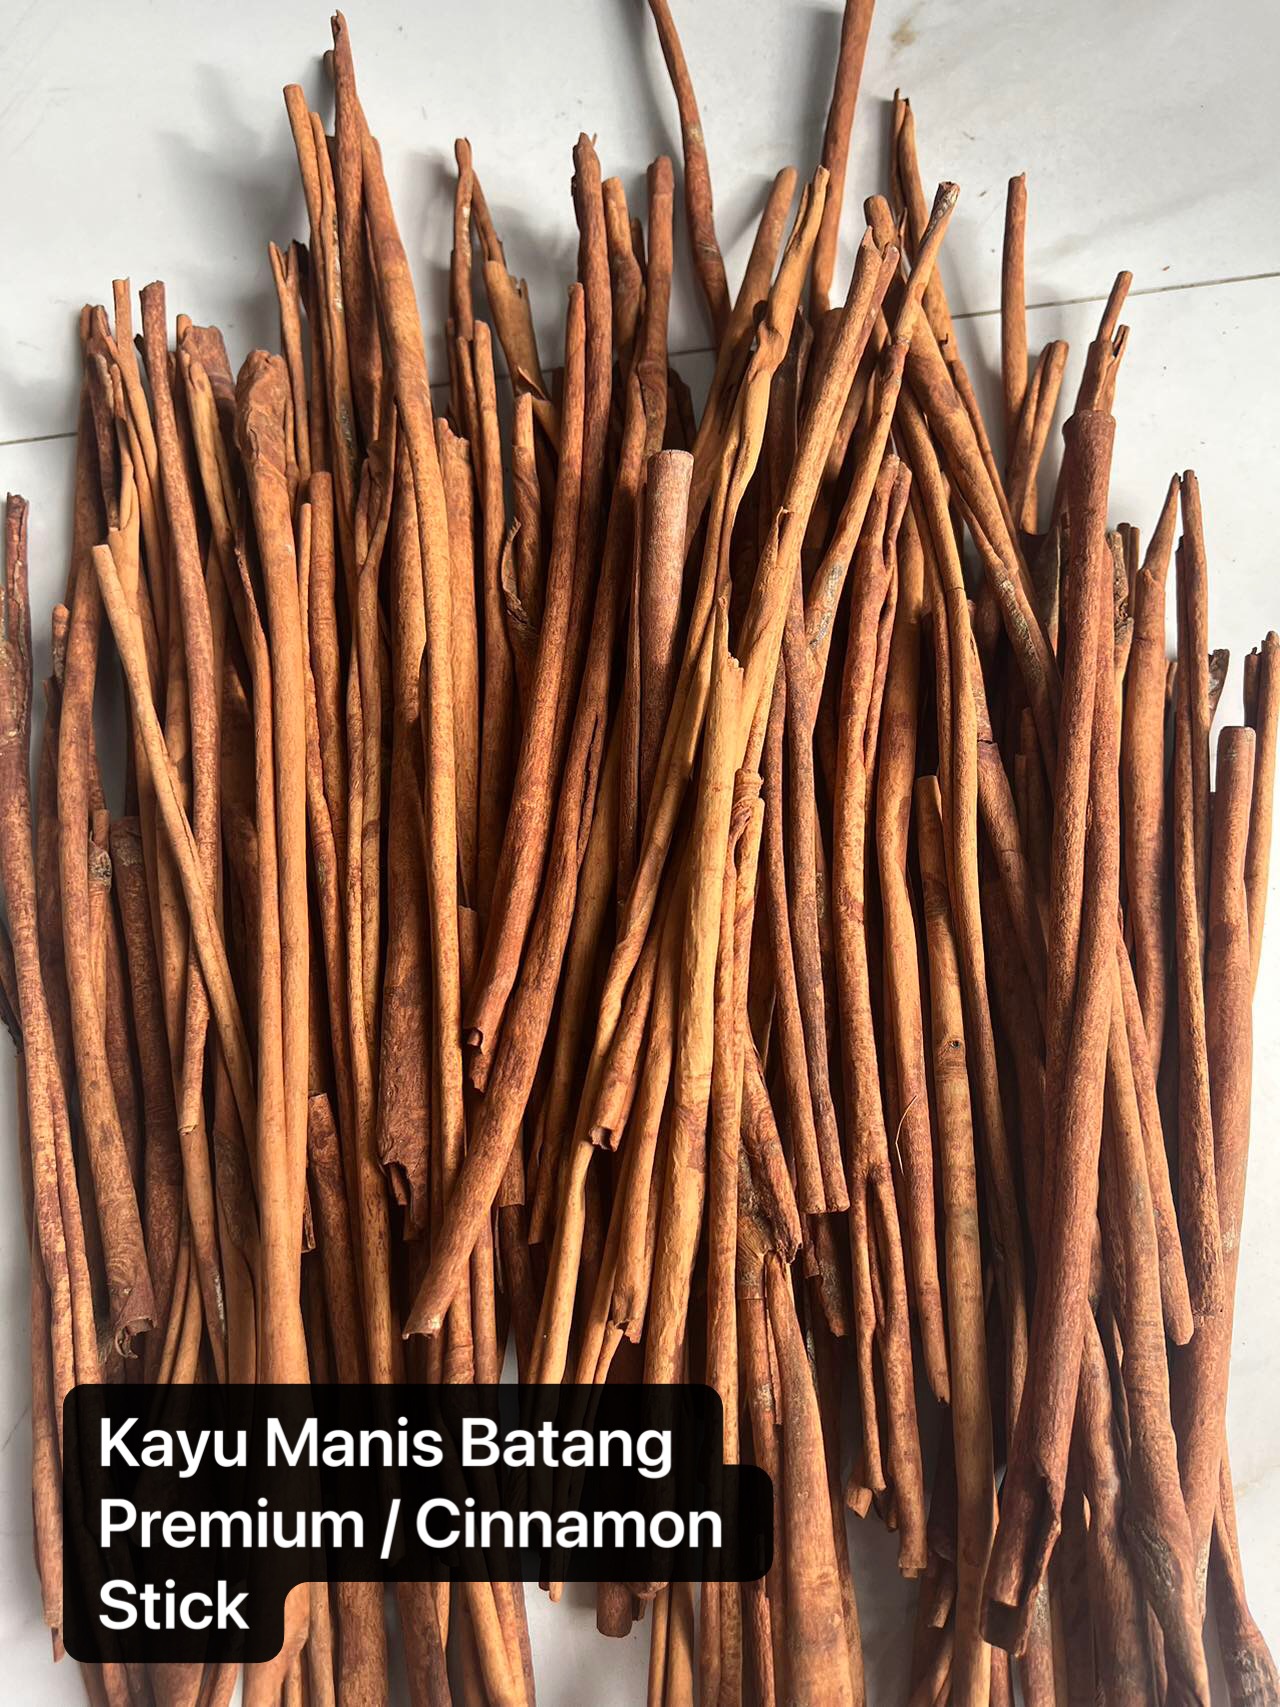 100gram Kayu Manis Batang / Cinnamon Stick Cassiavera Premium Quality Kualitas Export Luar Negri